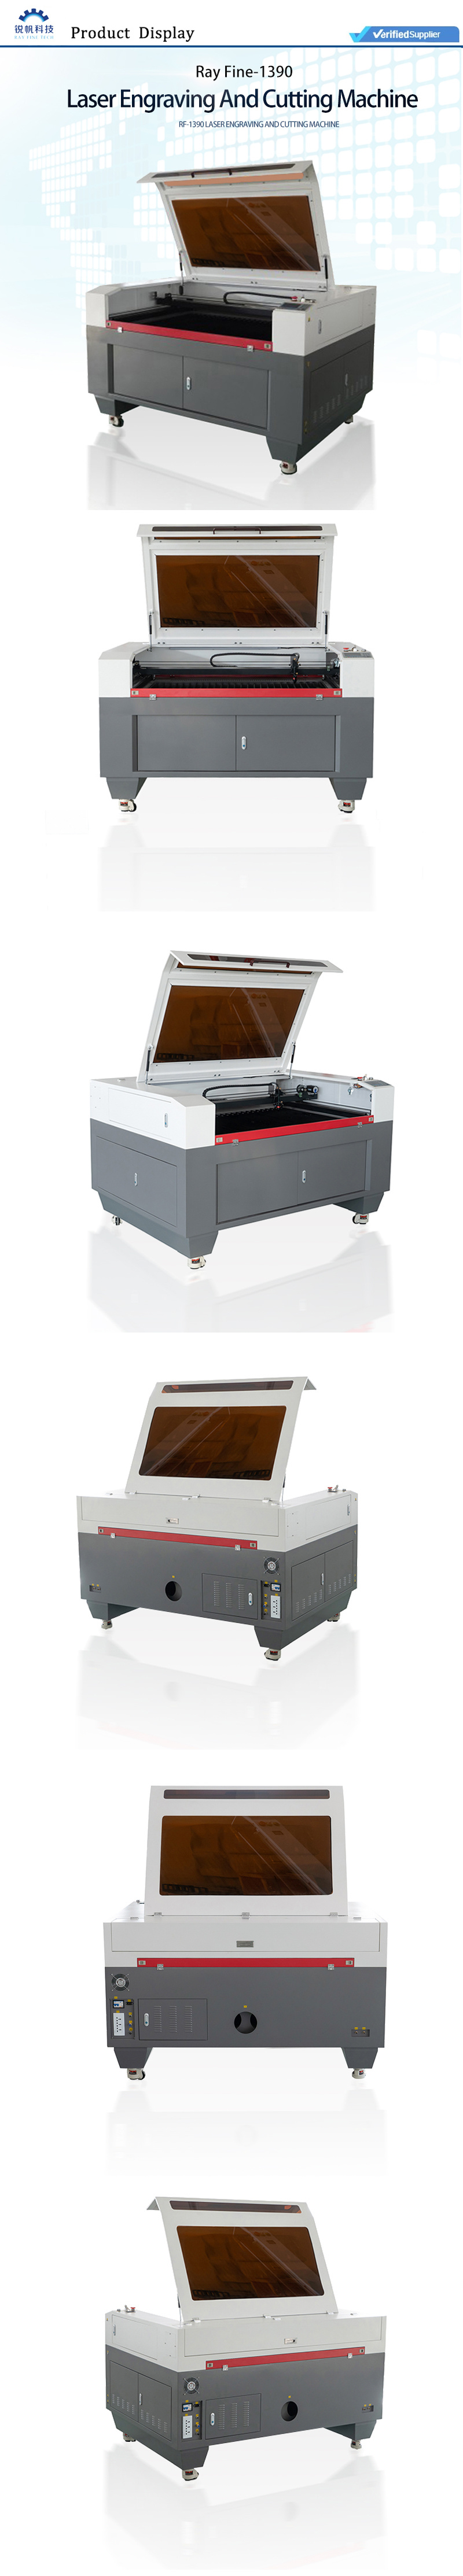 Laser Cutting Engraving Machine 1390 for Acrylic, Wood, MDF